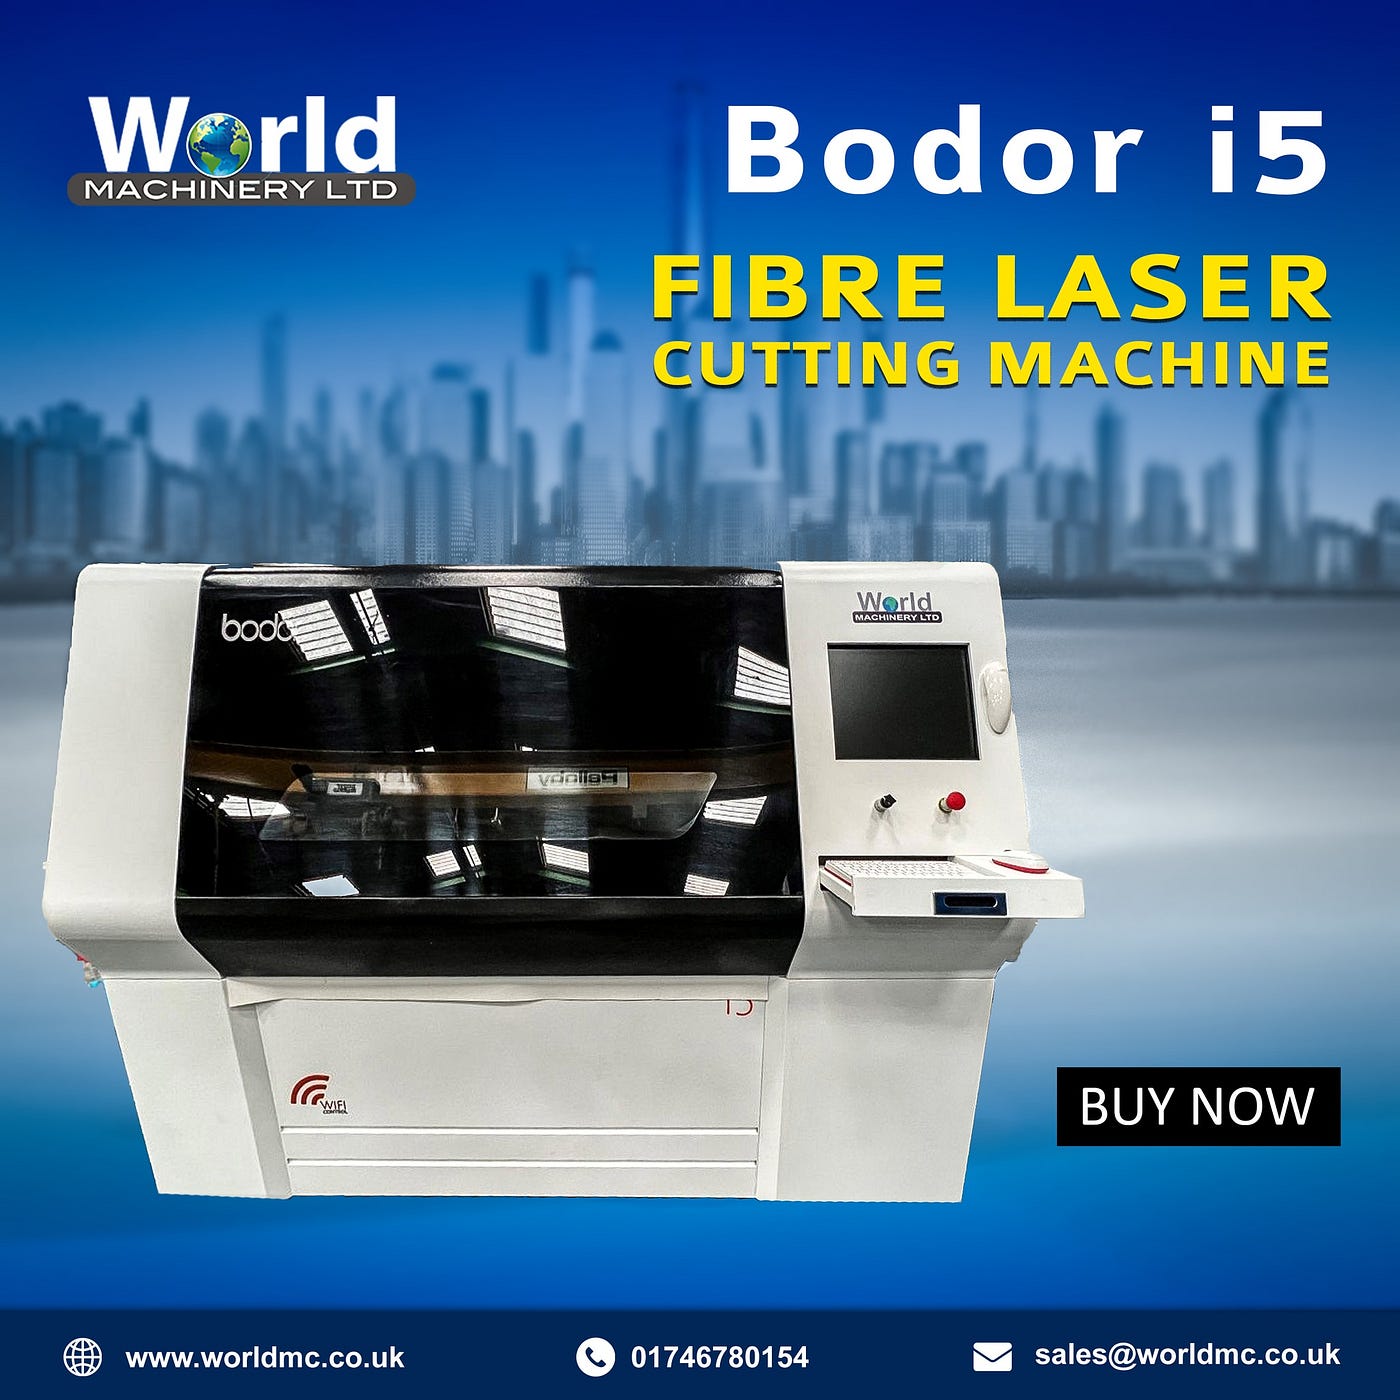 Bodor Laser Cutting Machines - World Machinery Ltd - Medium